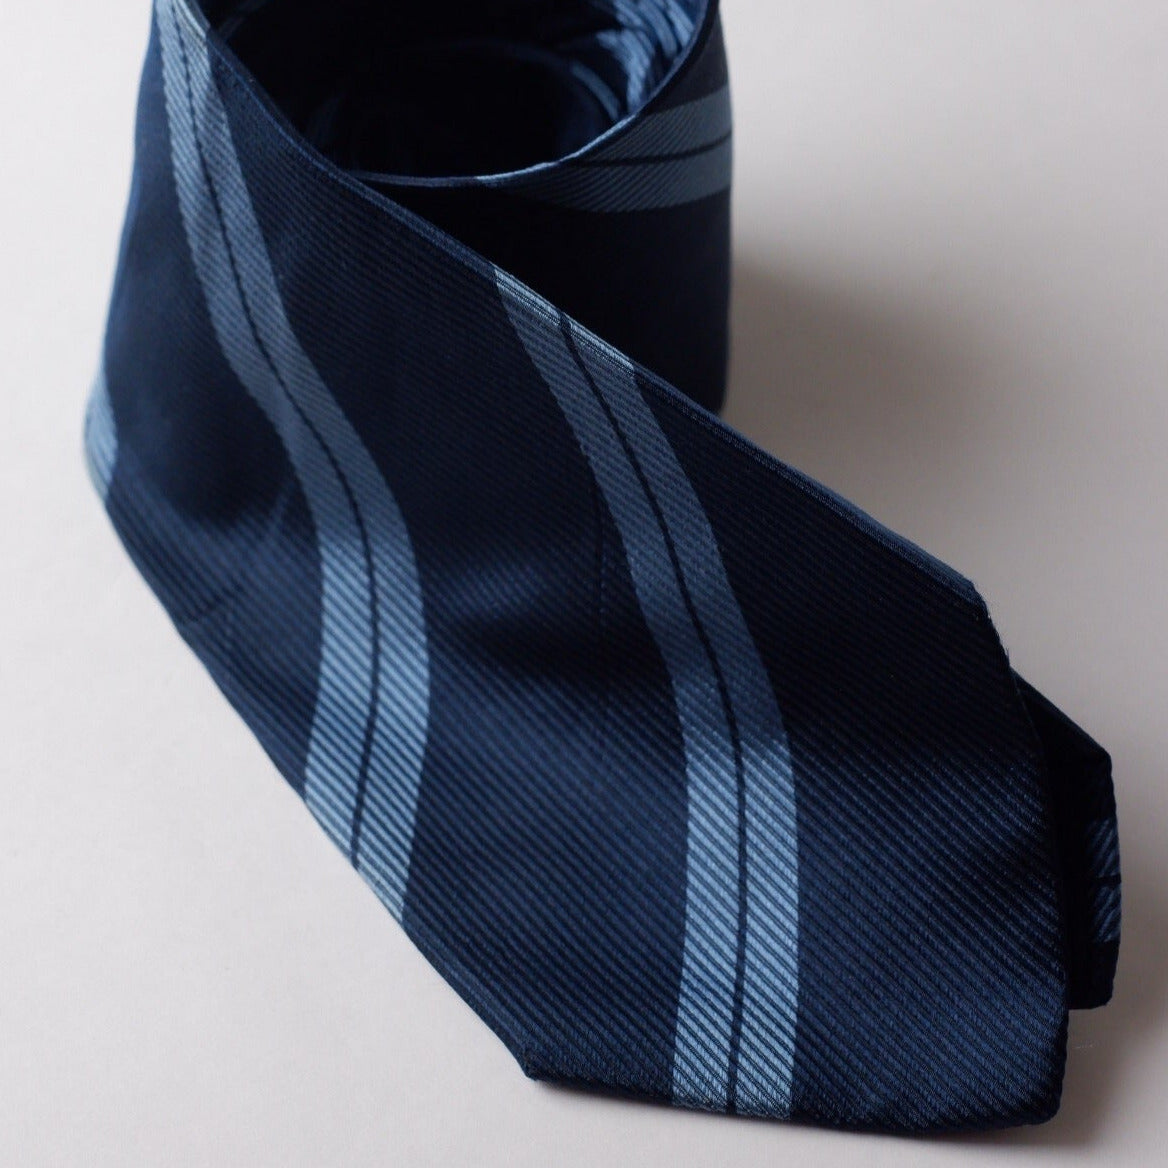 Lanolini Navy with Blue Stripes Necktie